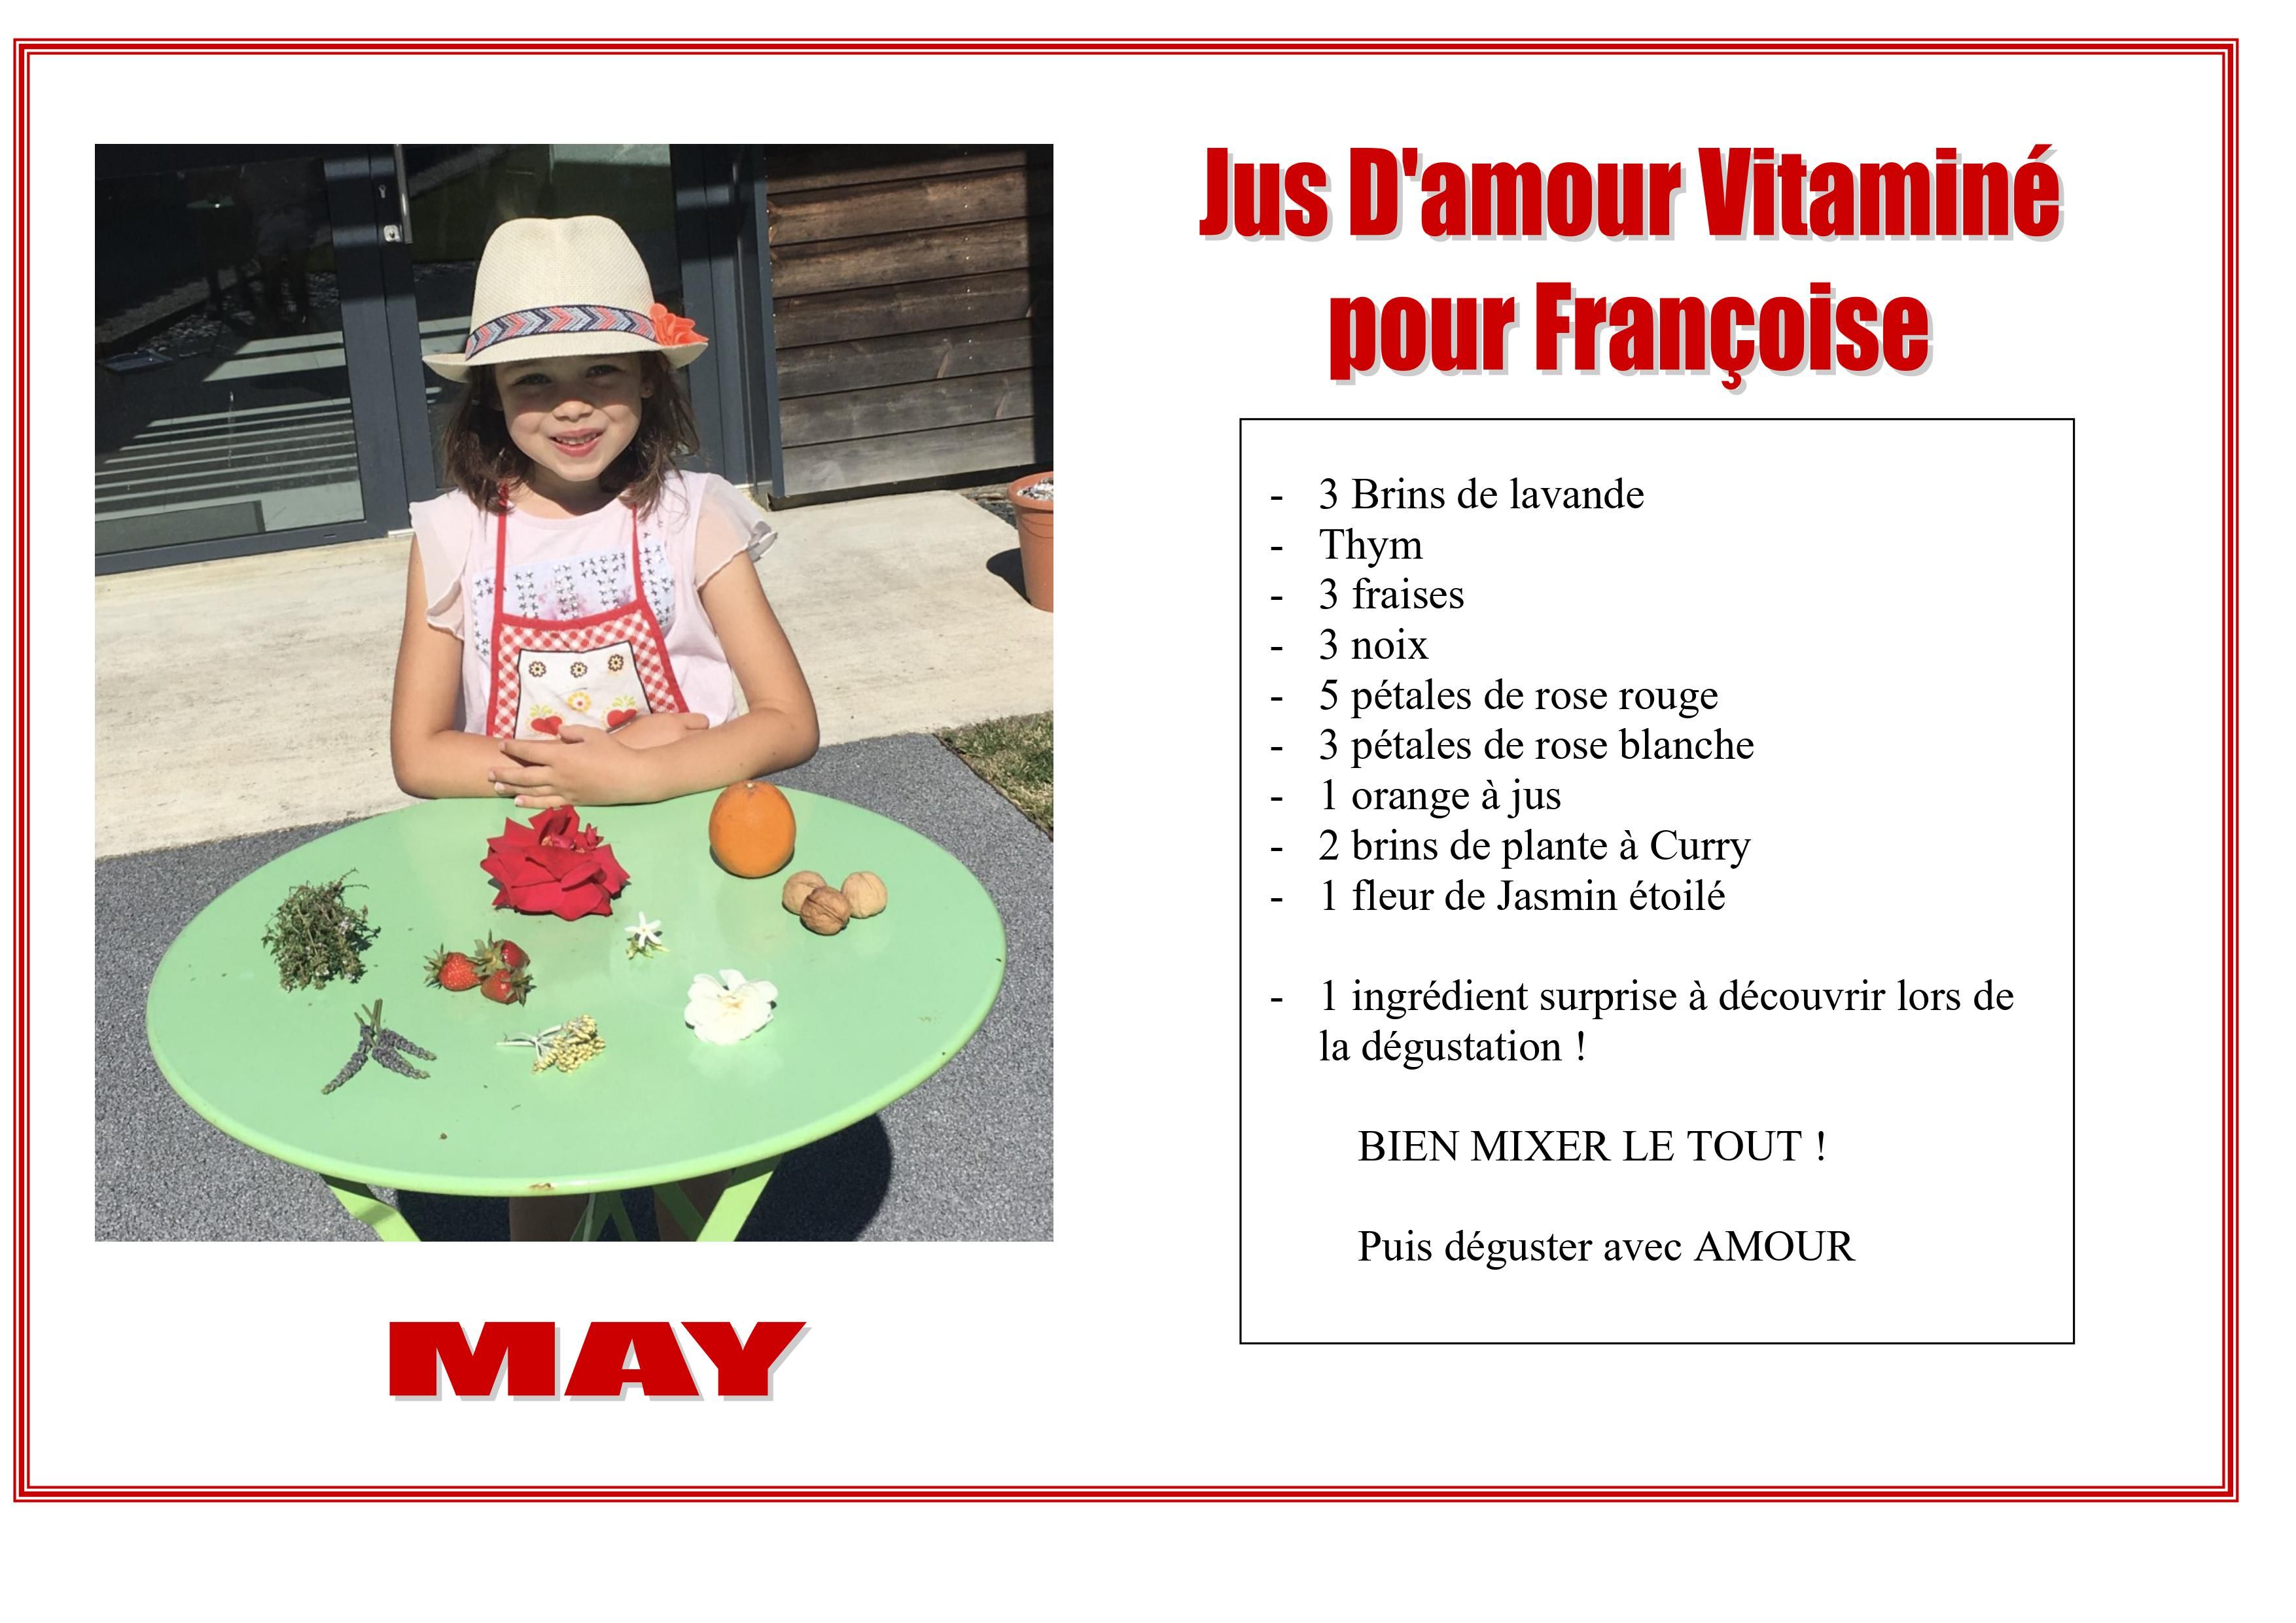 04-06-2020 MAY jus d'amour vitaminé.jpg - 611,25 kB